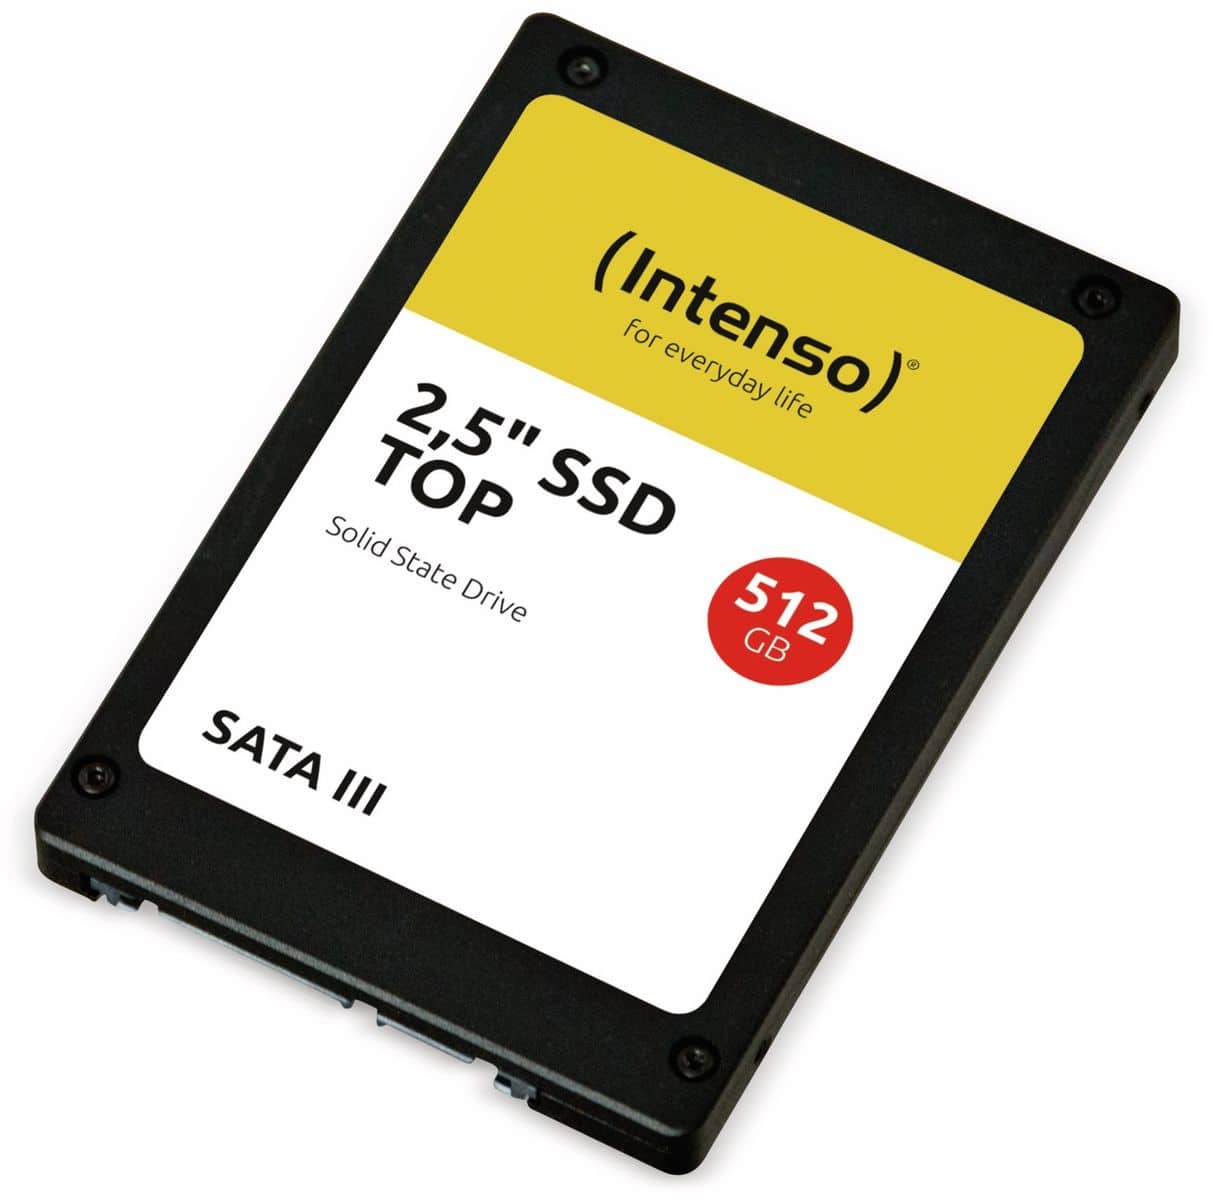 INTENSO SSD SATA III Top, 512 GB von Intenso